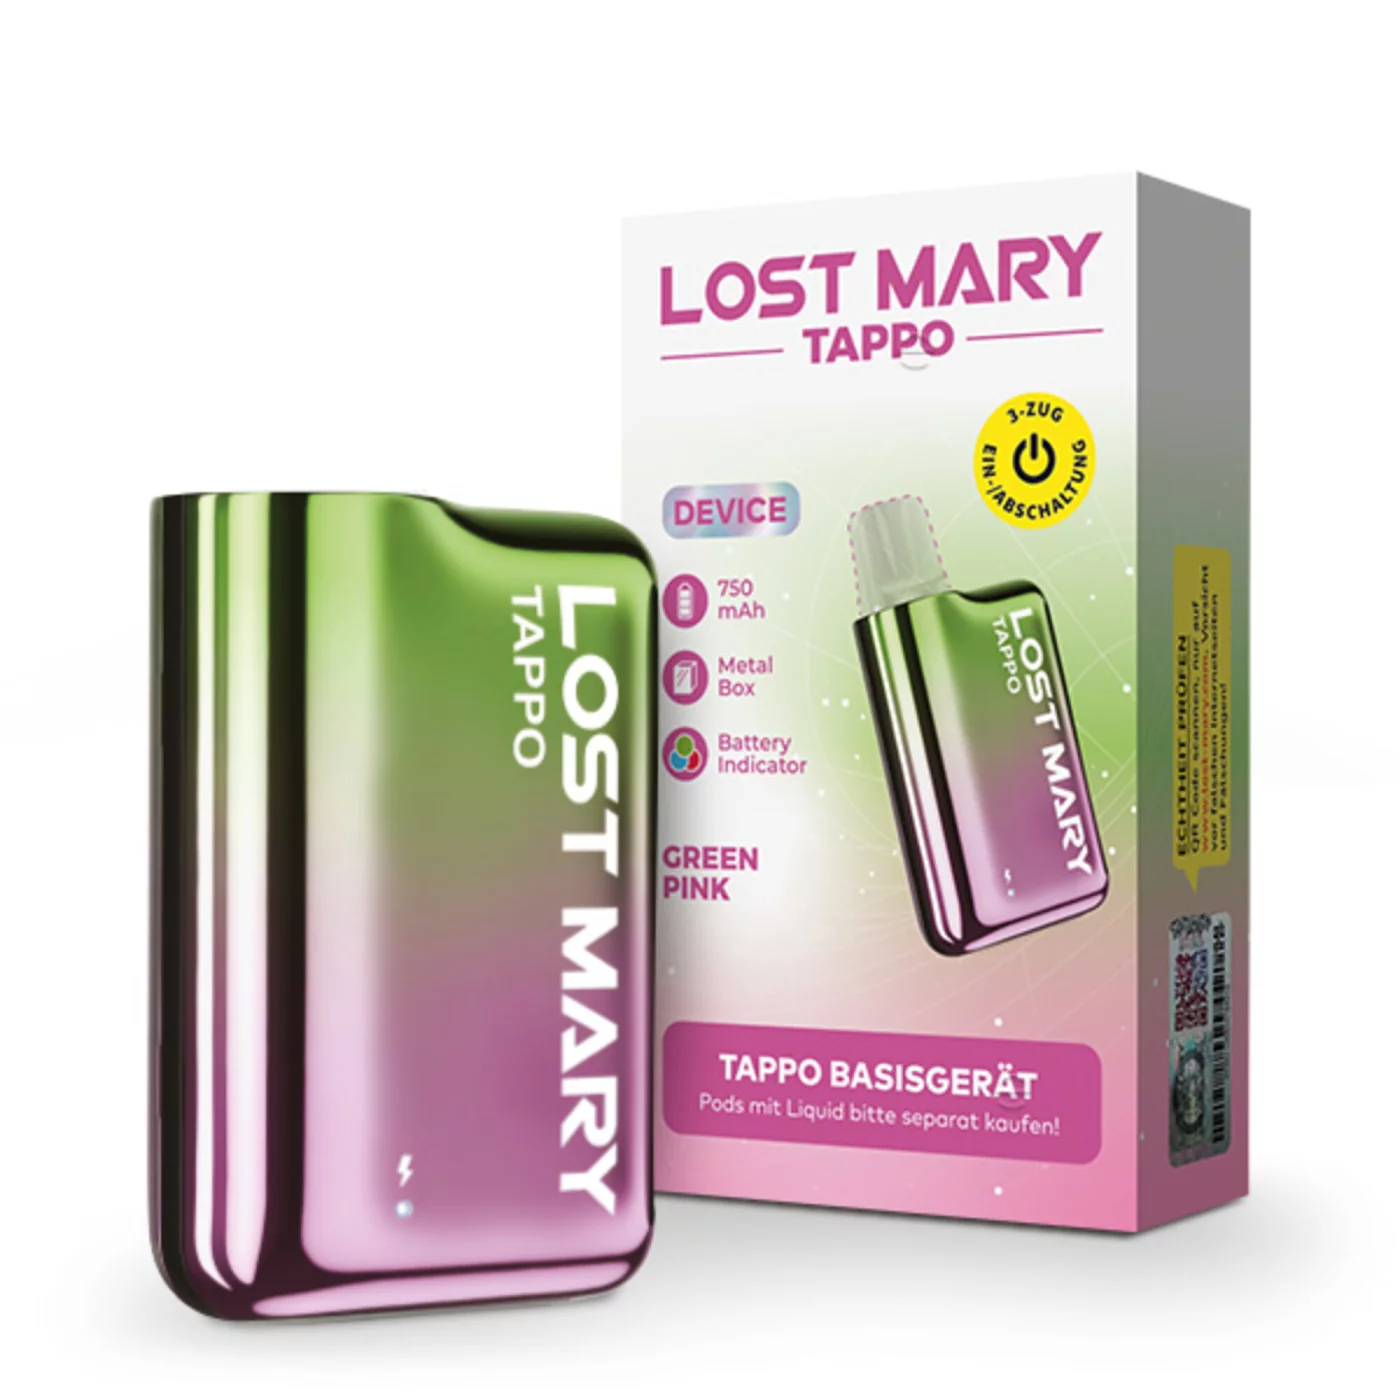 Lost Mary Tappo Pod System - Basisgerät Green Pink